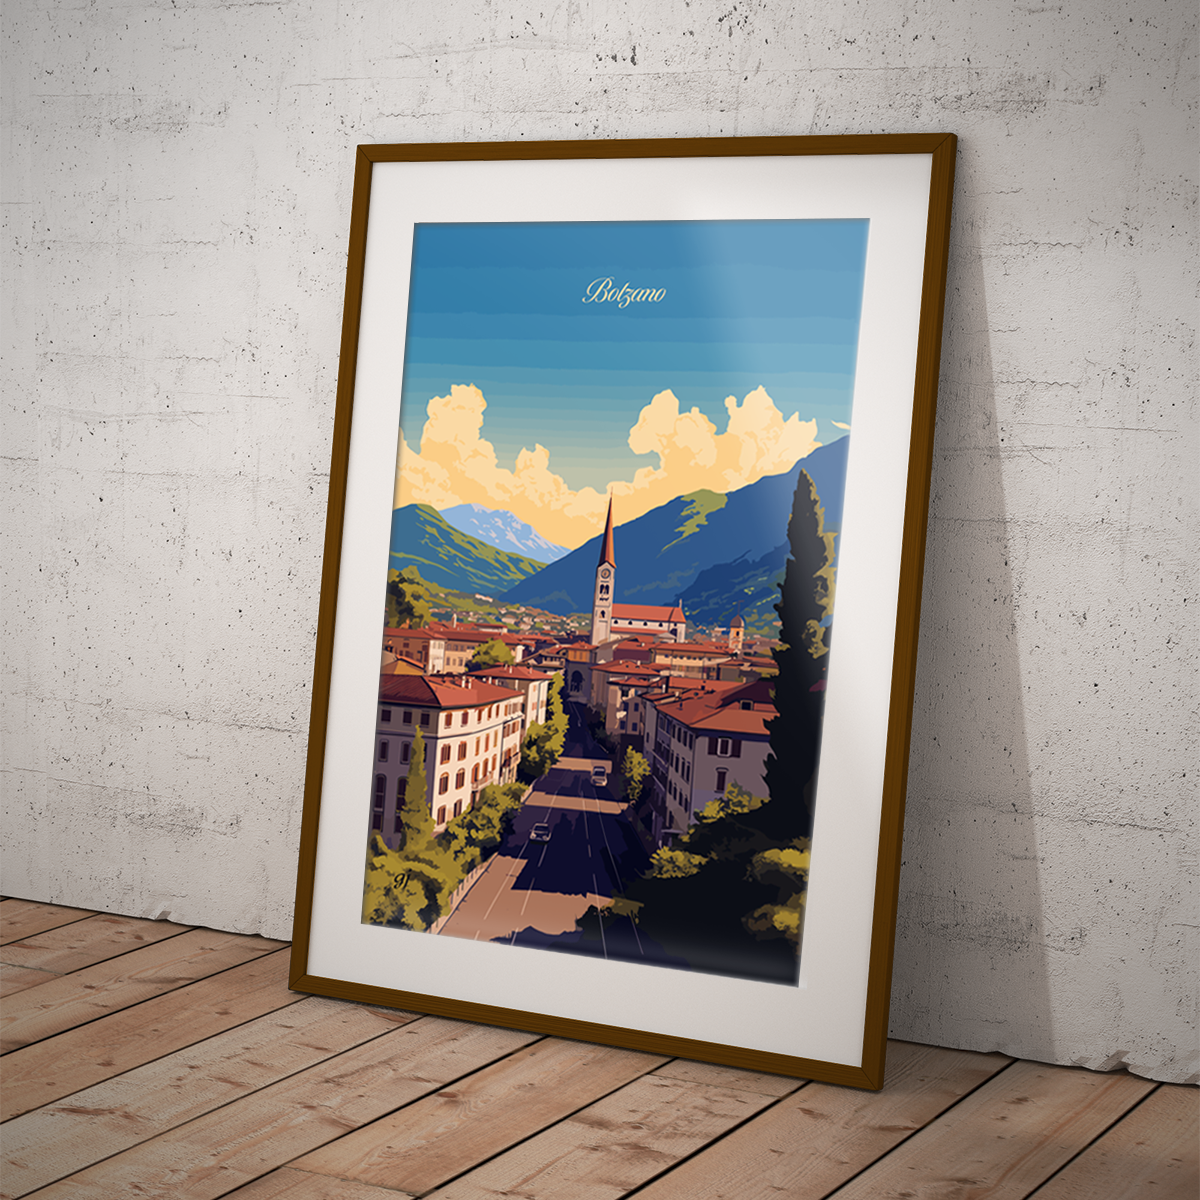 Bolzano poster by bon voyage design